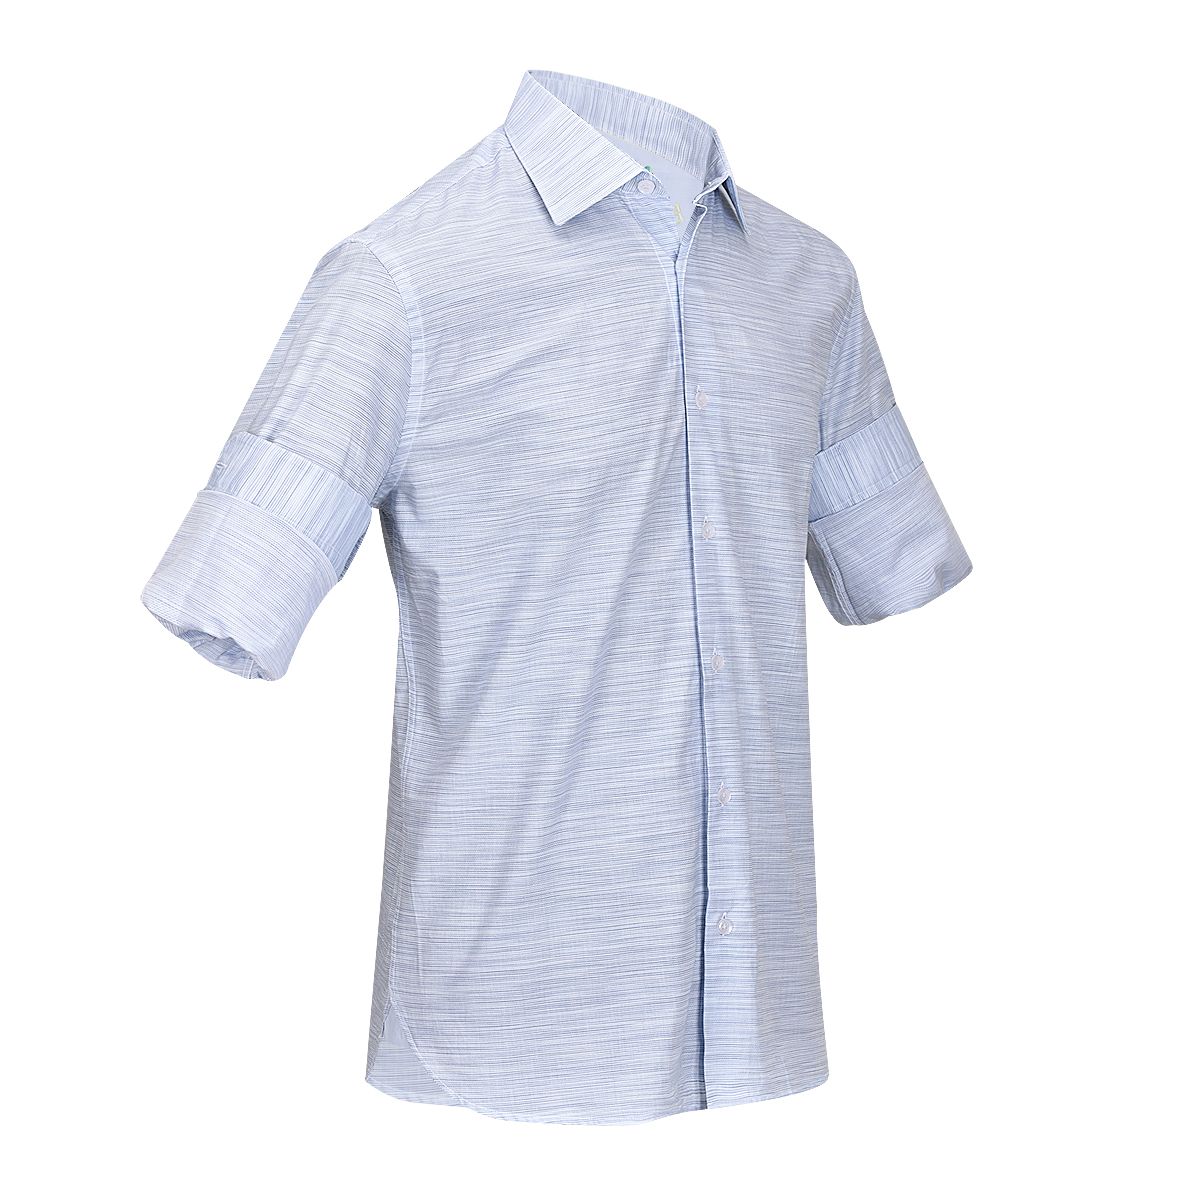 CM11010 - Cuadra blue casual fashion medallion abstract shirt for men-Kuet.us